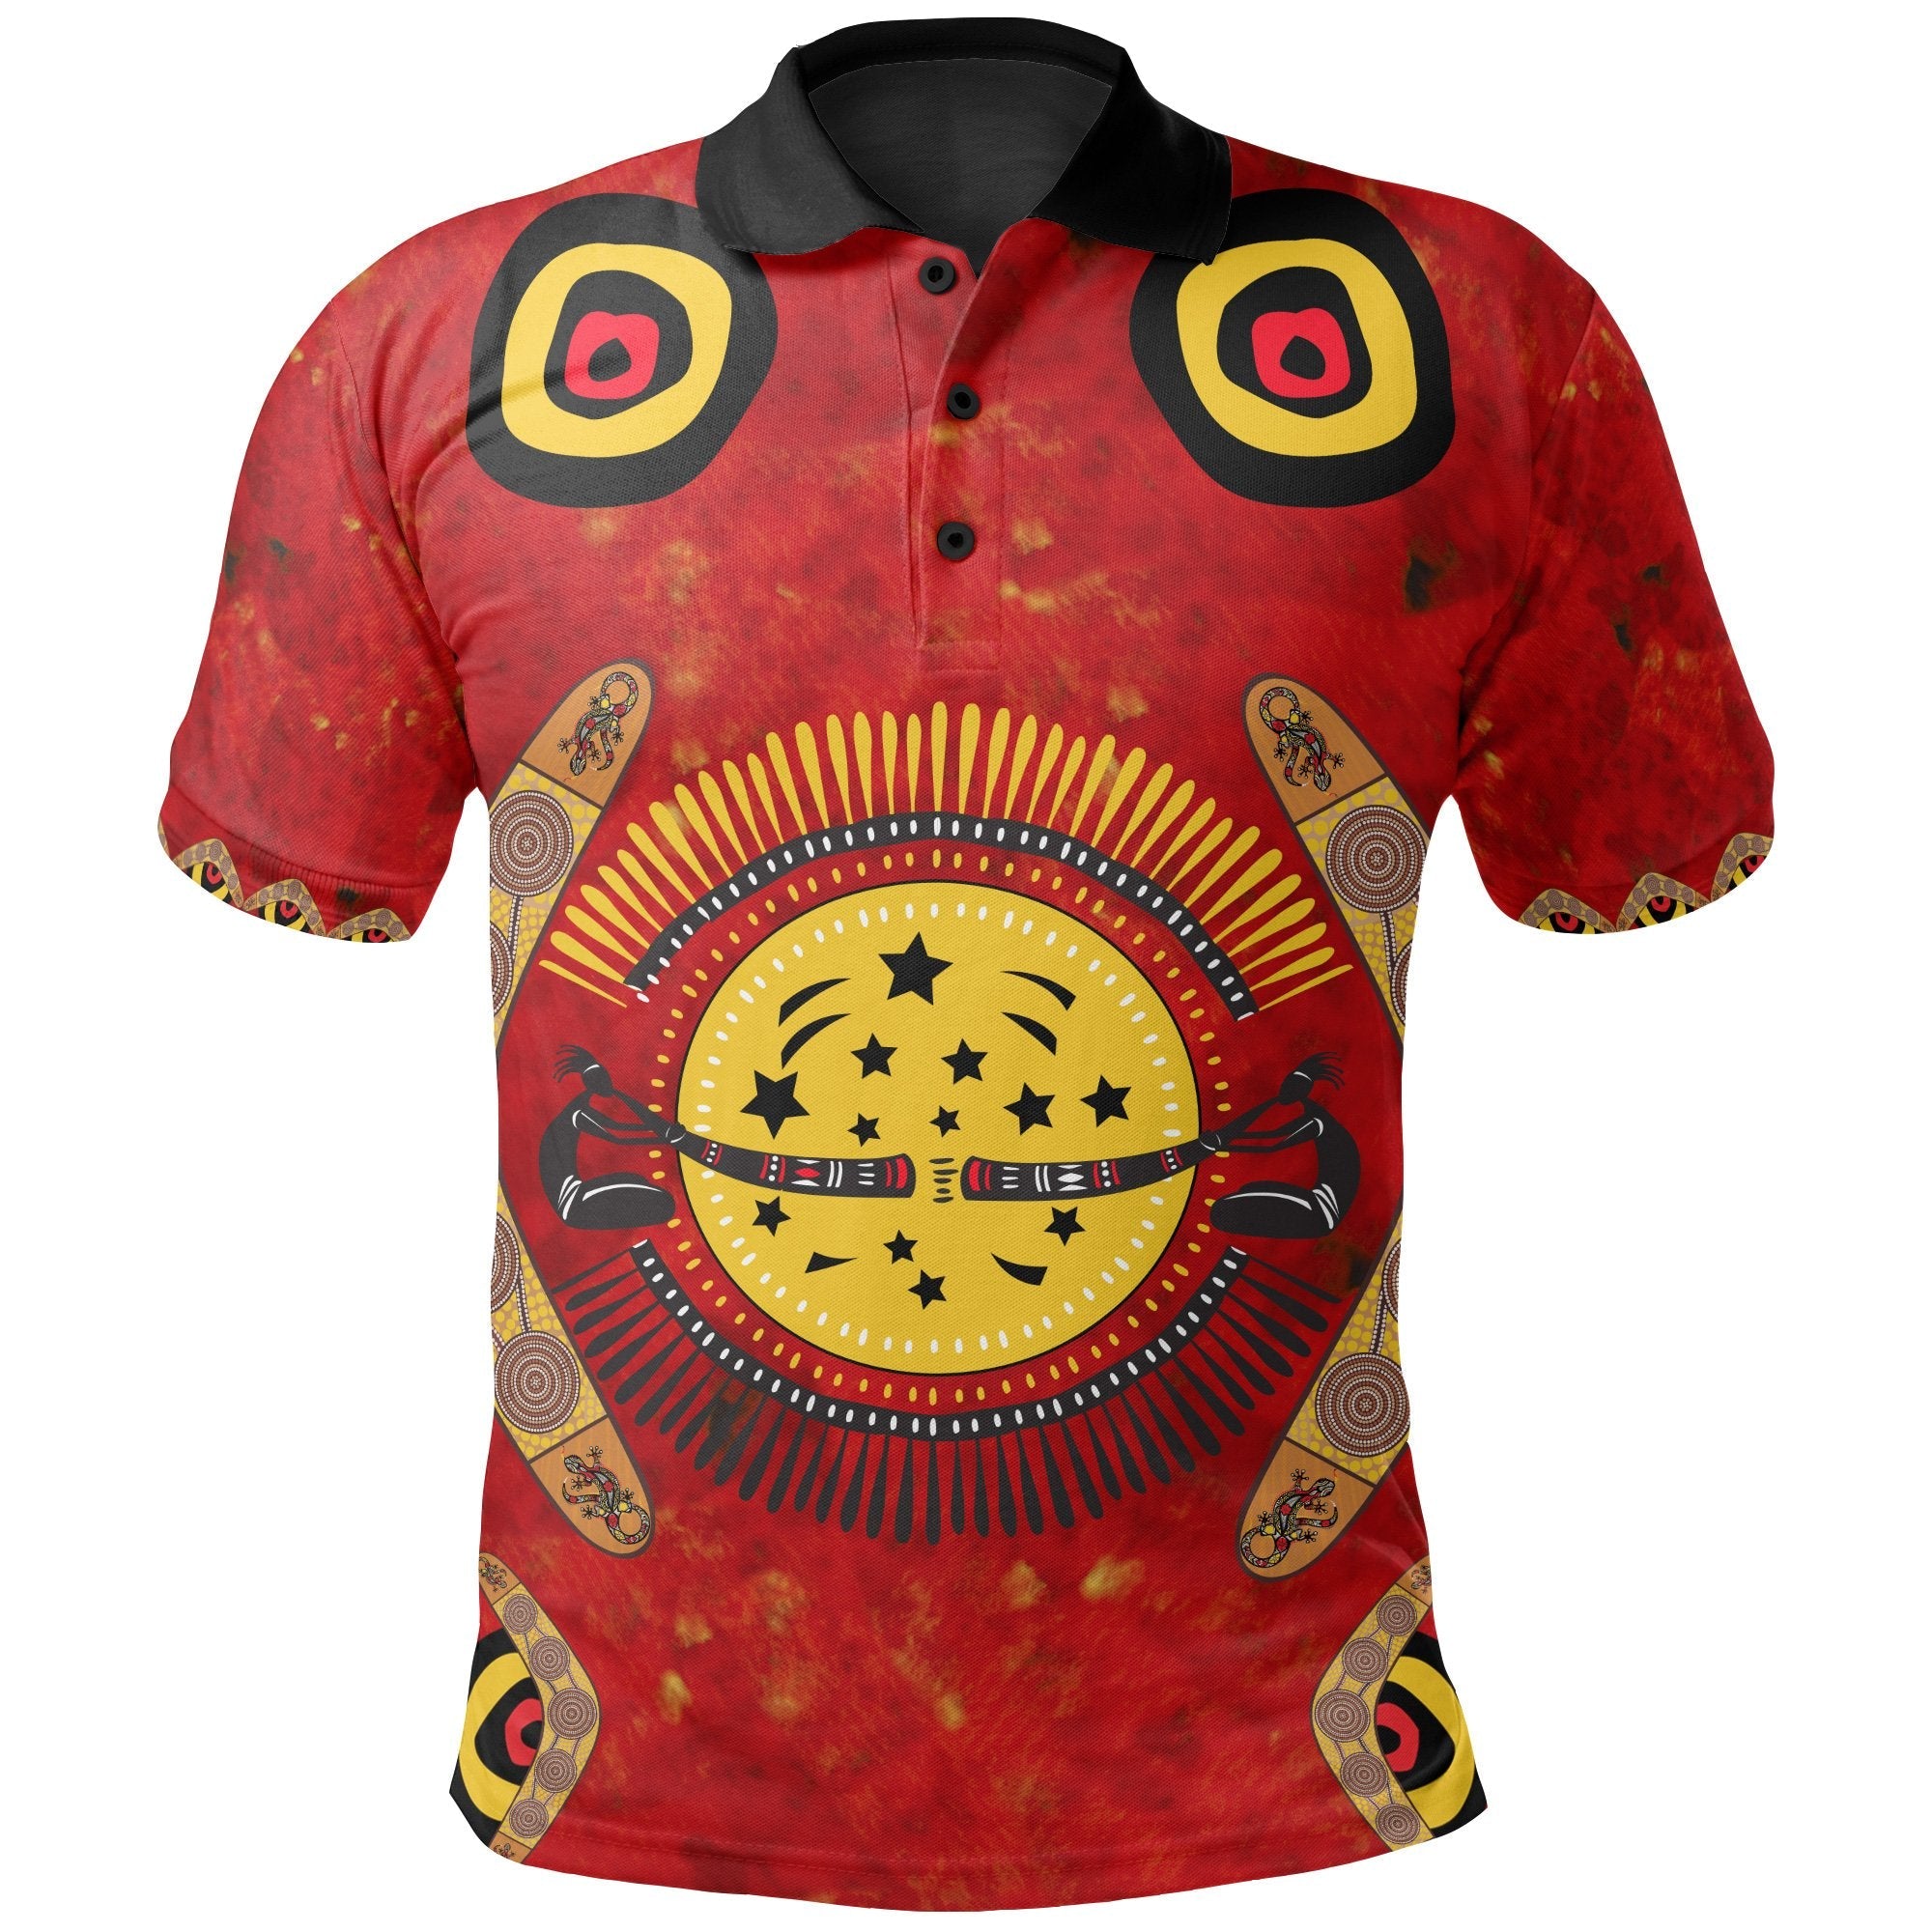 aboriginal-polo-shirt-lizard-and-boomerang-patterns